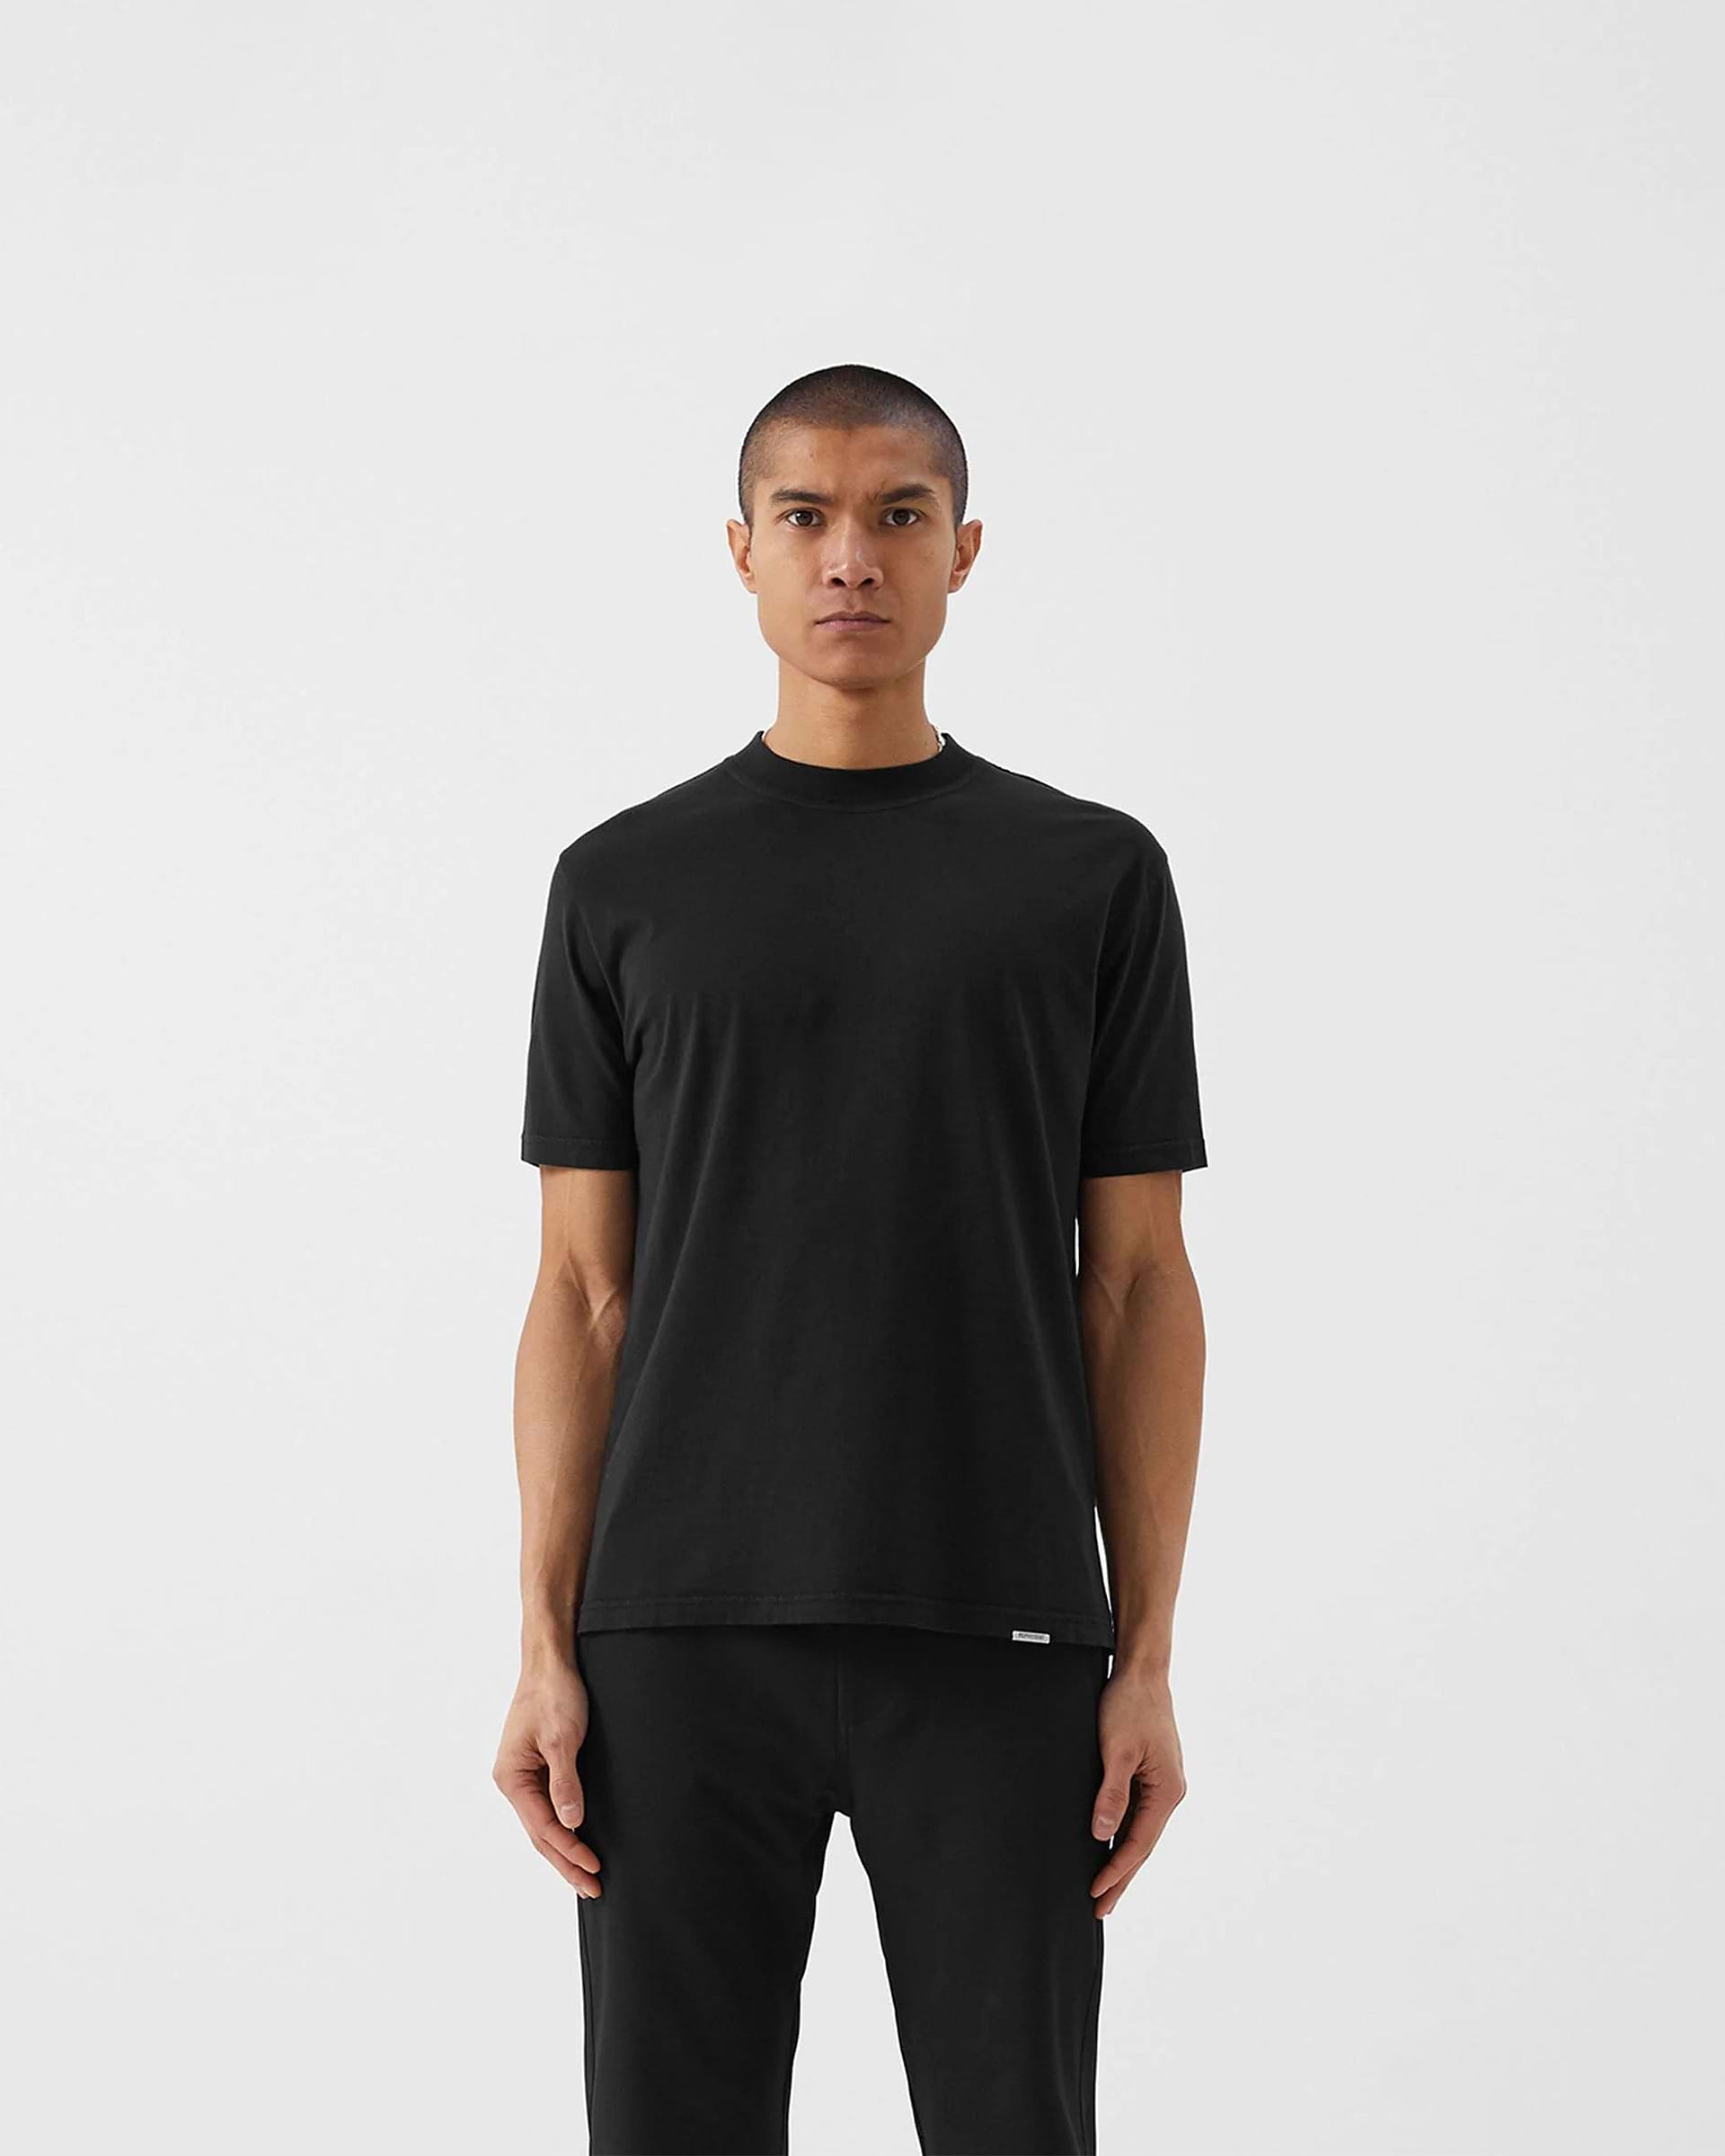 The Core T-Shirt - Off Black